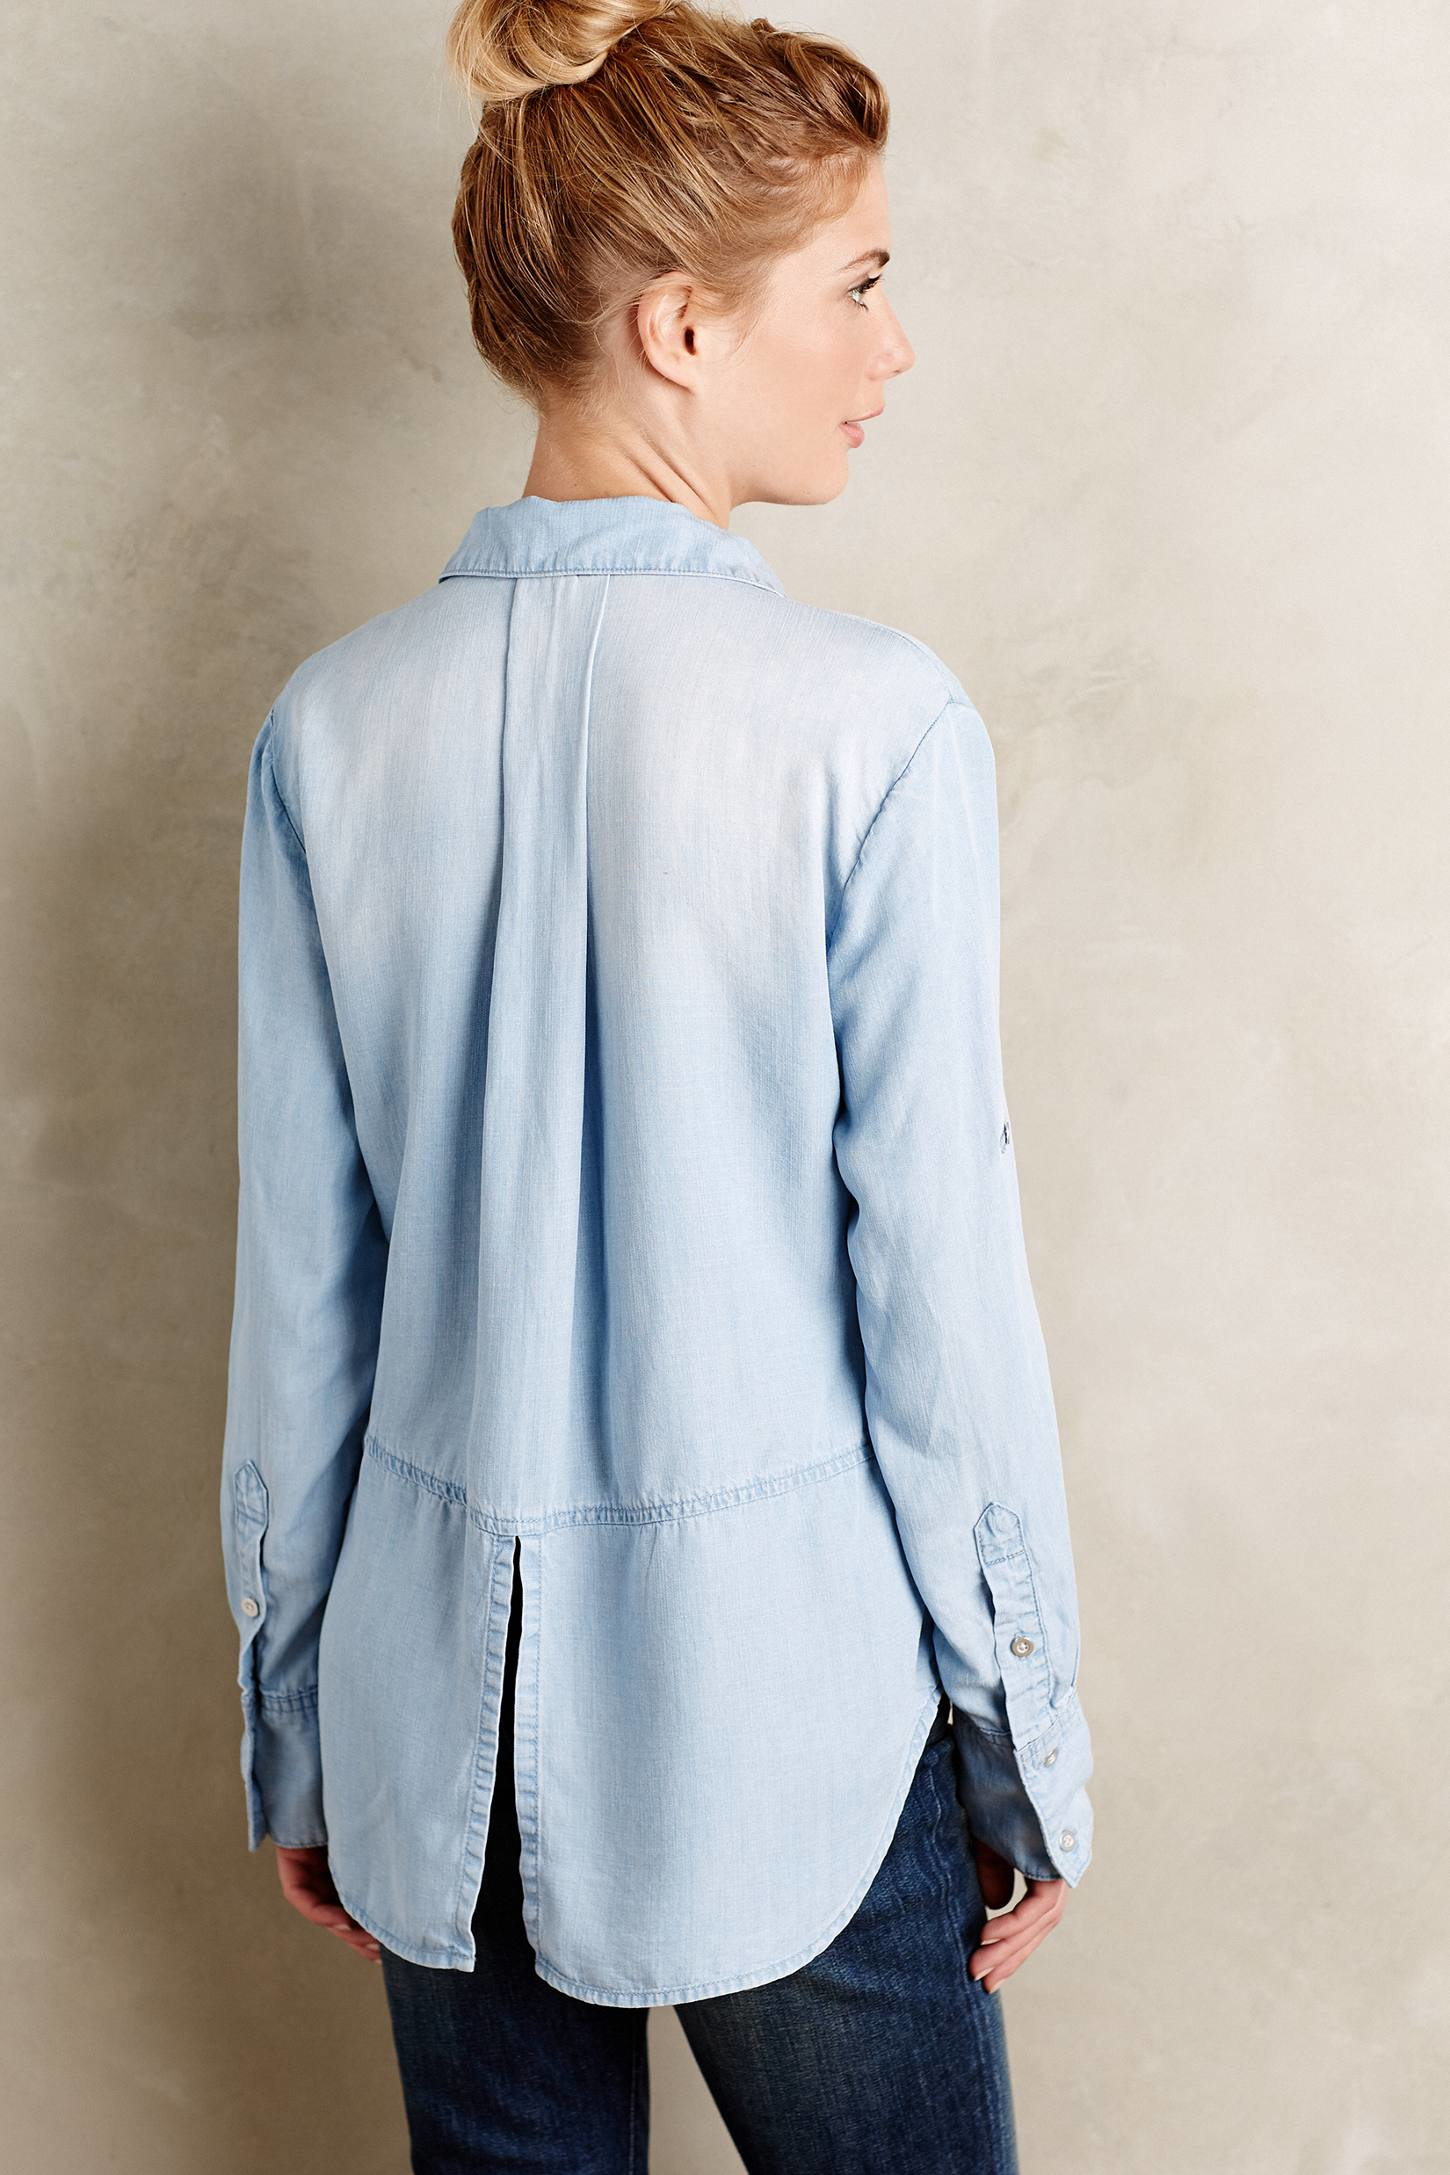 Cloth & stone Split-back Chambray Buttondown in Blue | Lyst